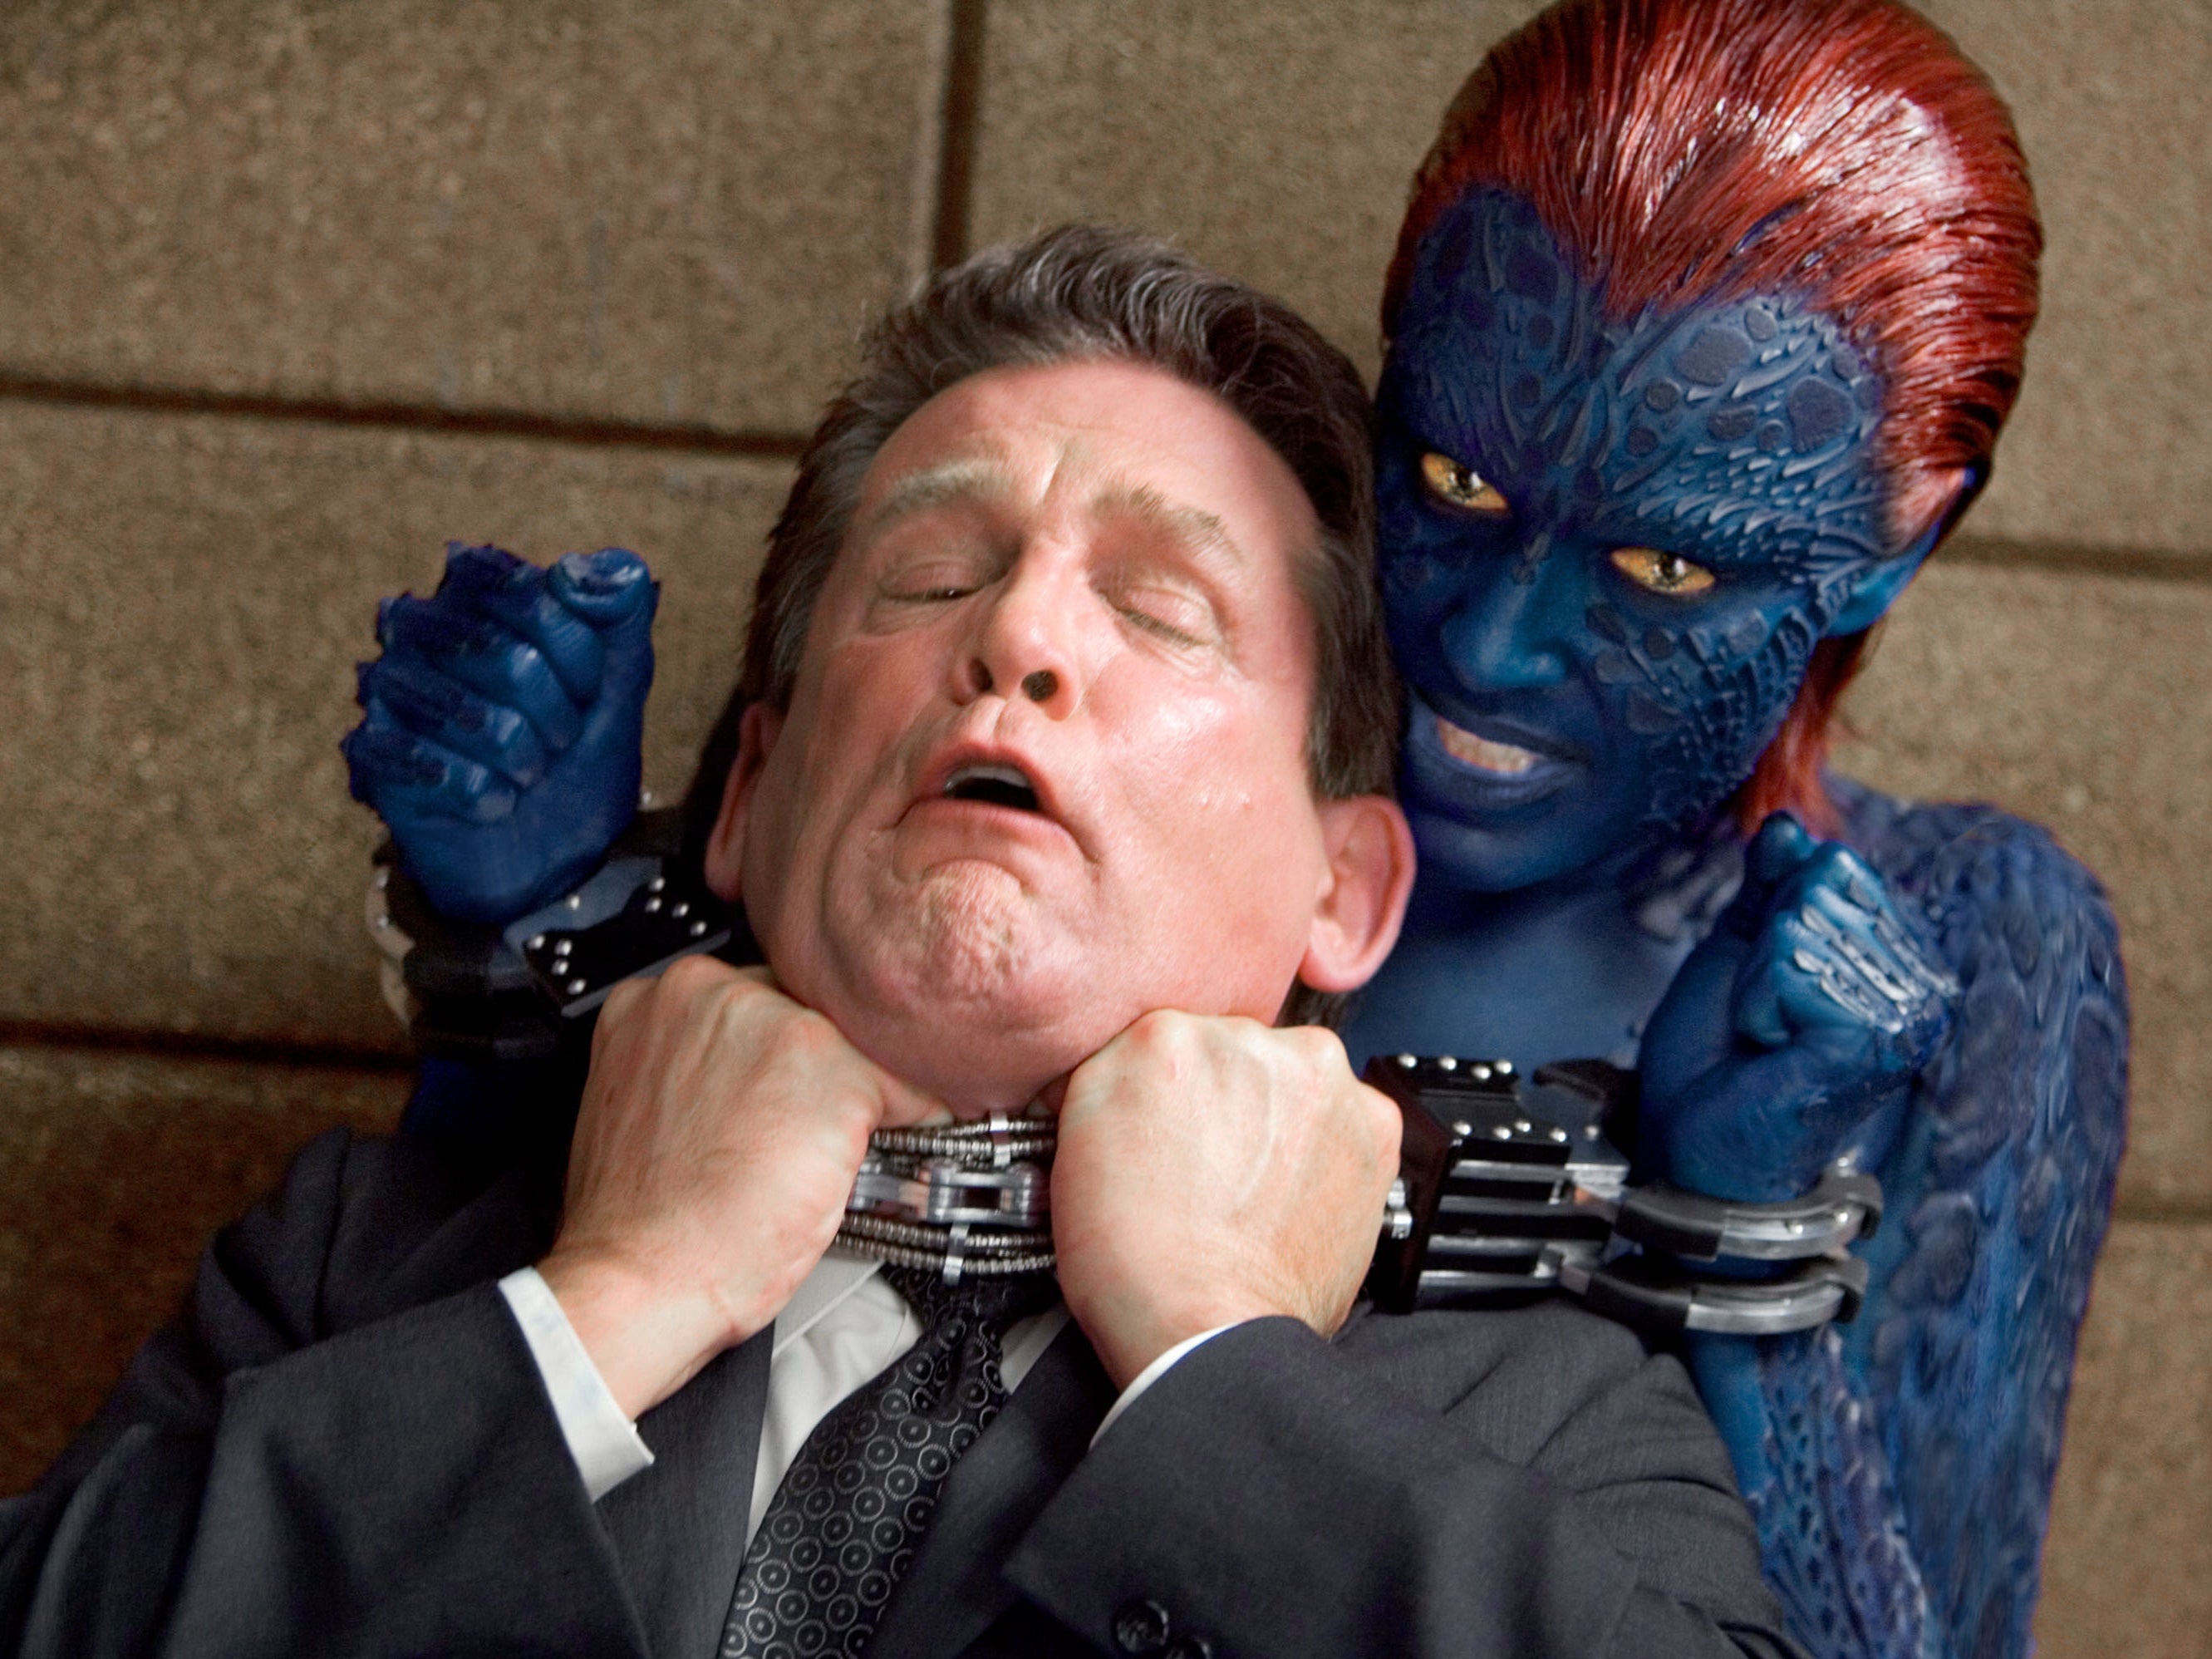 Mujer azul: Mystique, interpretada por Romijn, estrangula al actor Anthony Heald en ‘X-Men: The Last Stand’